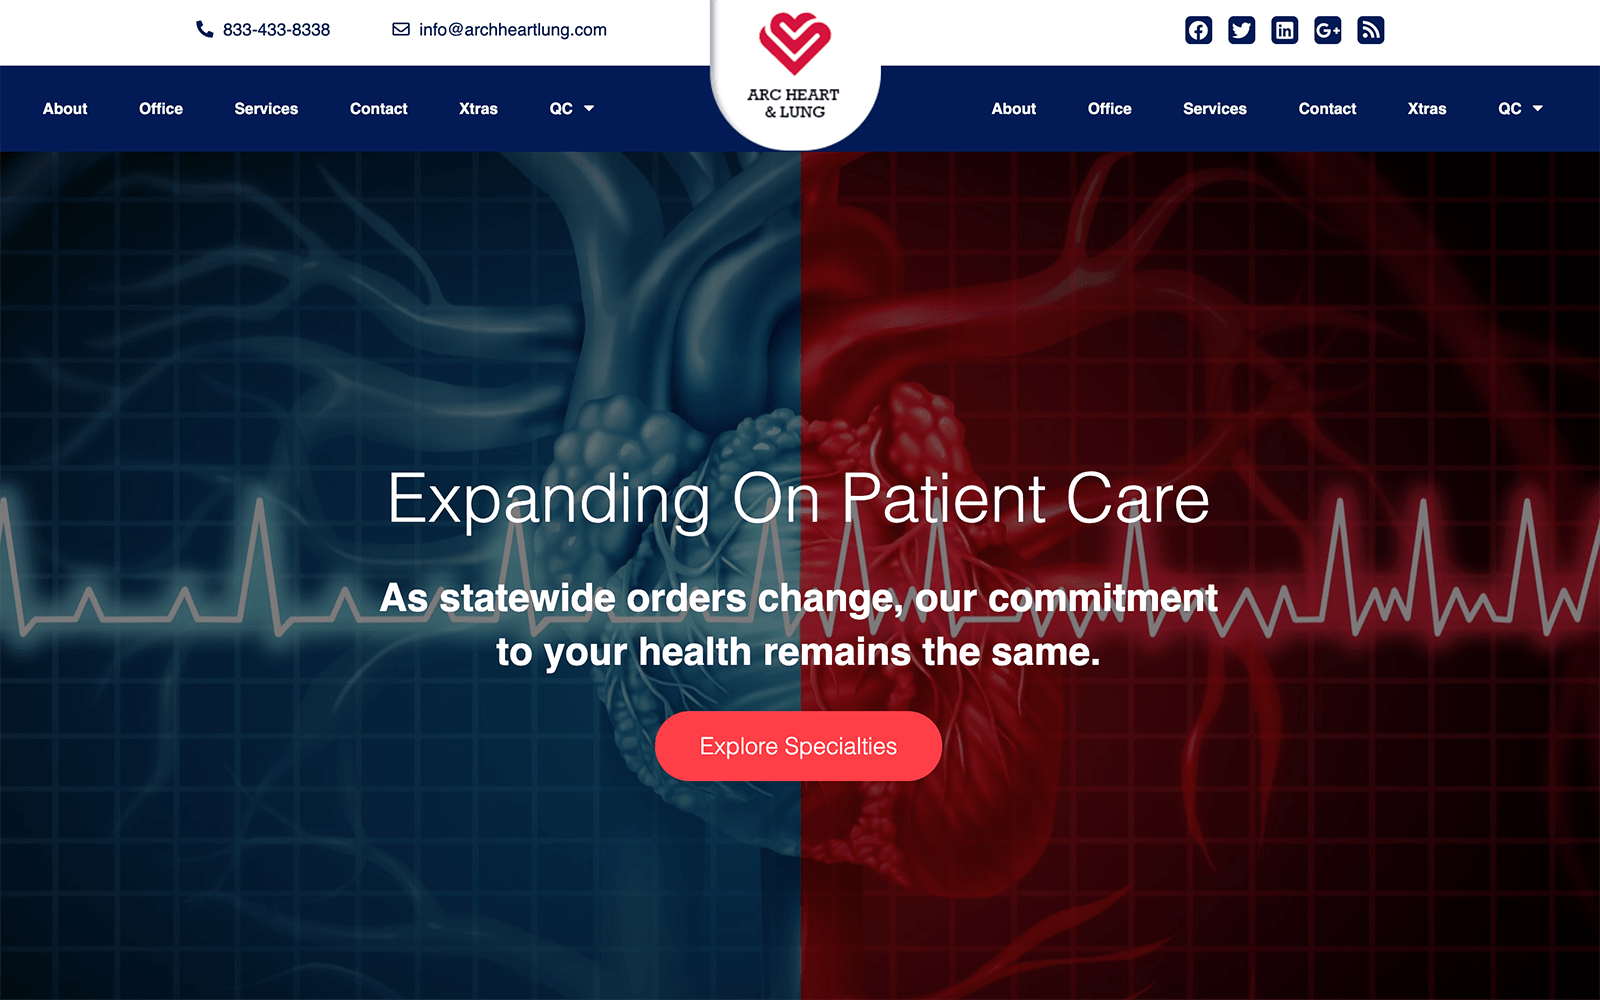 Patient Care Website Er And Urgent Care Practices